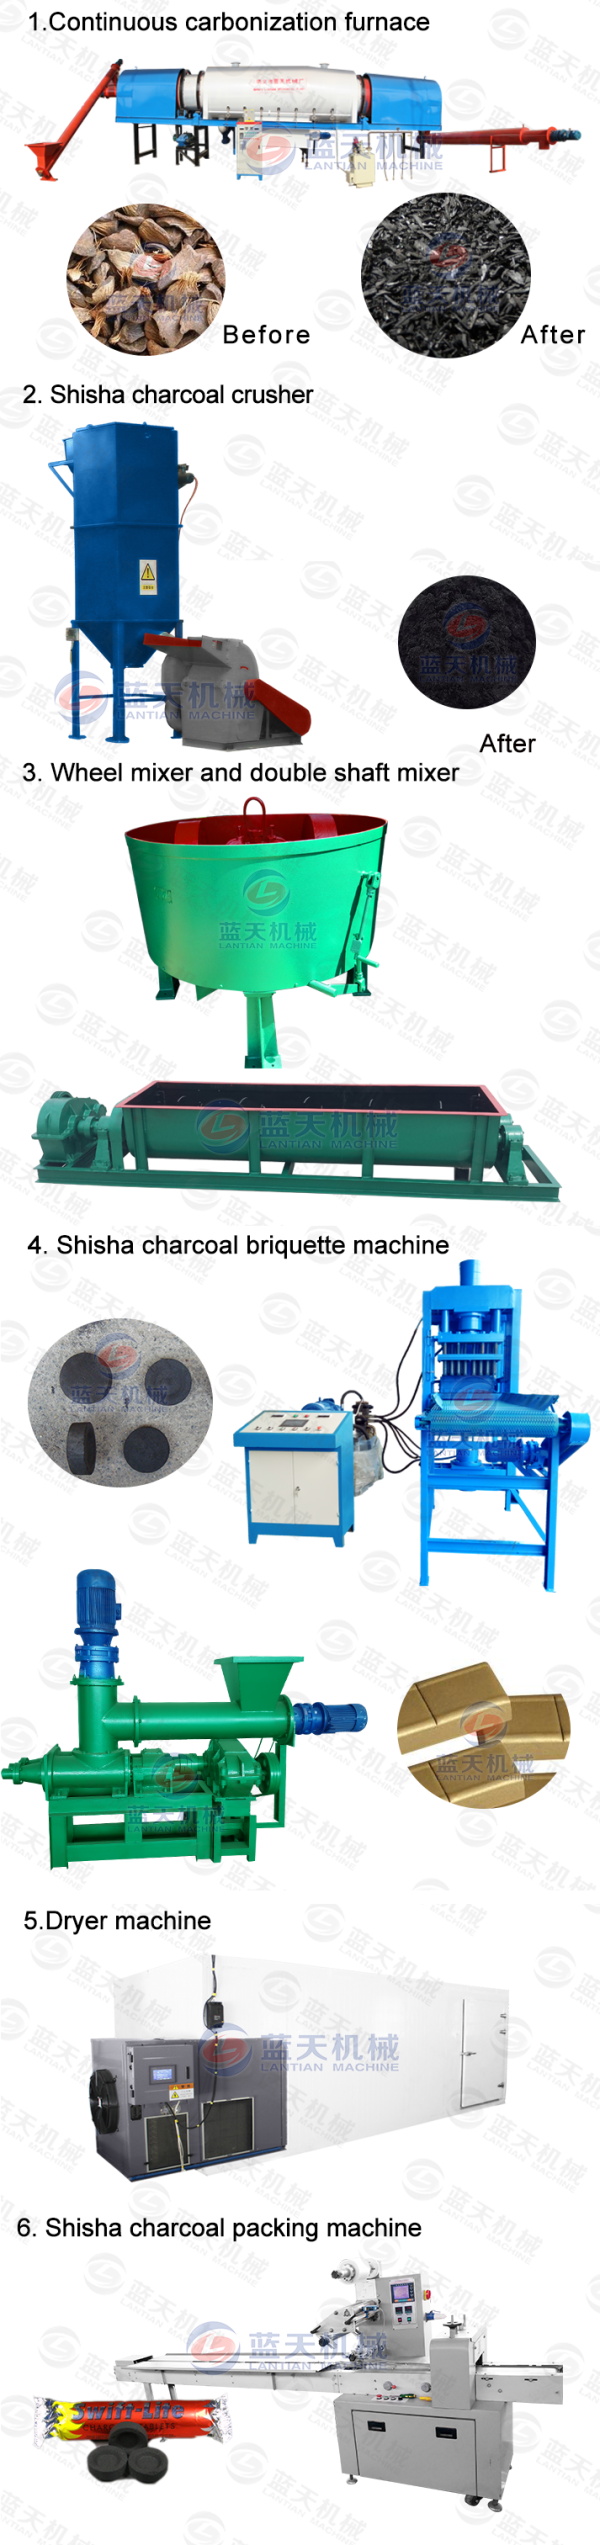 Product line of shisha charcoal dryer